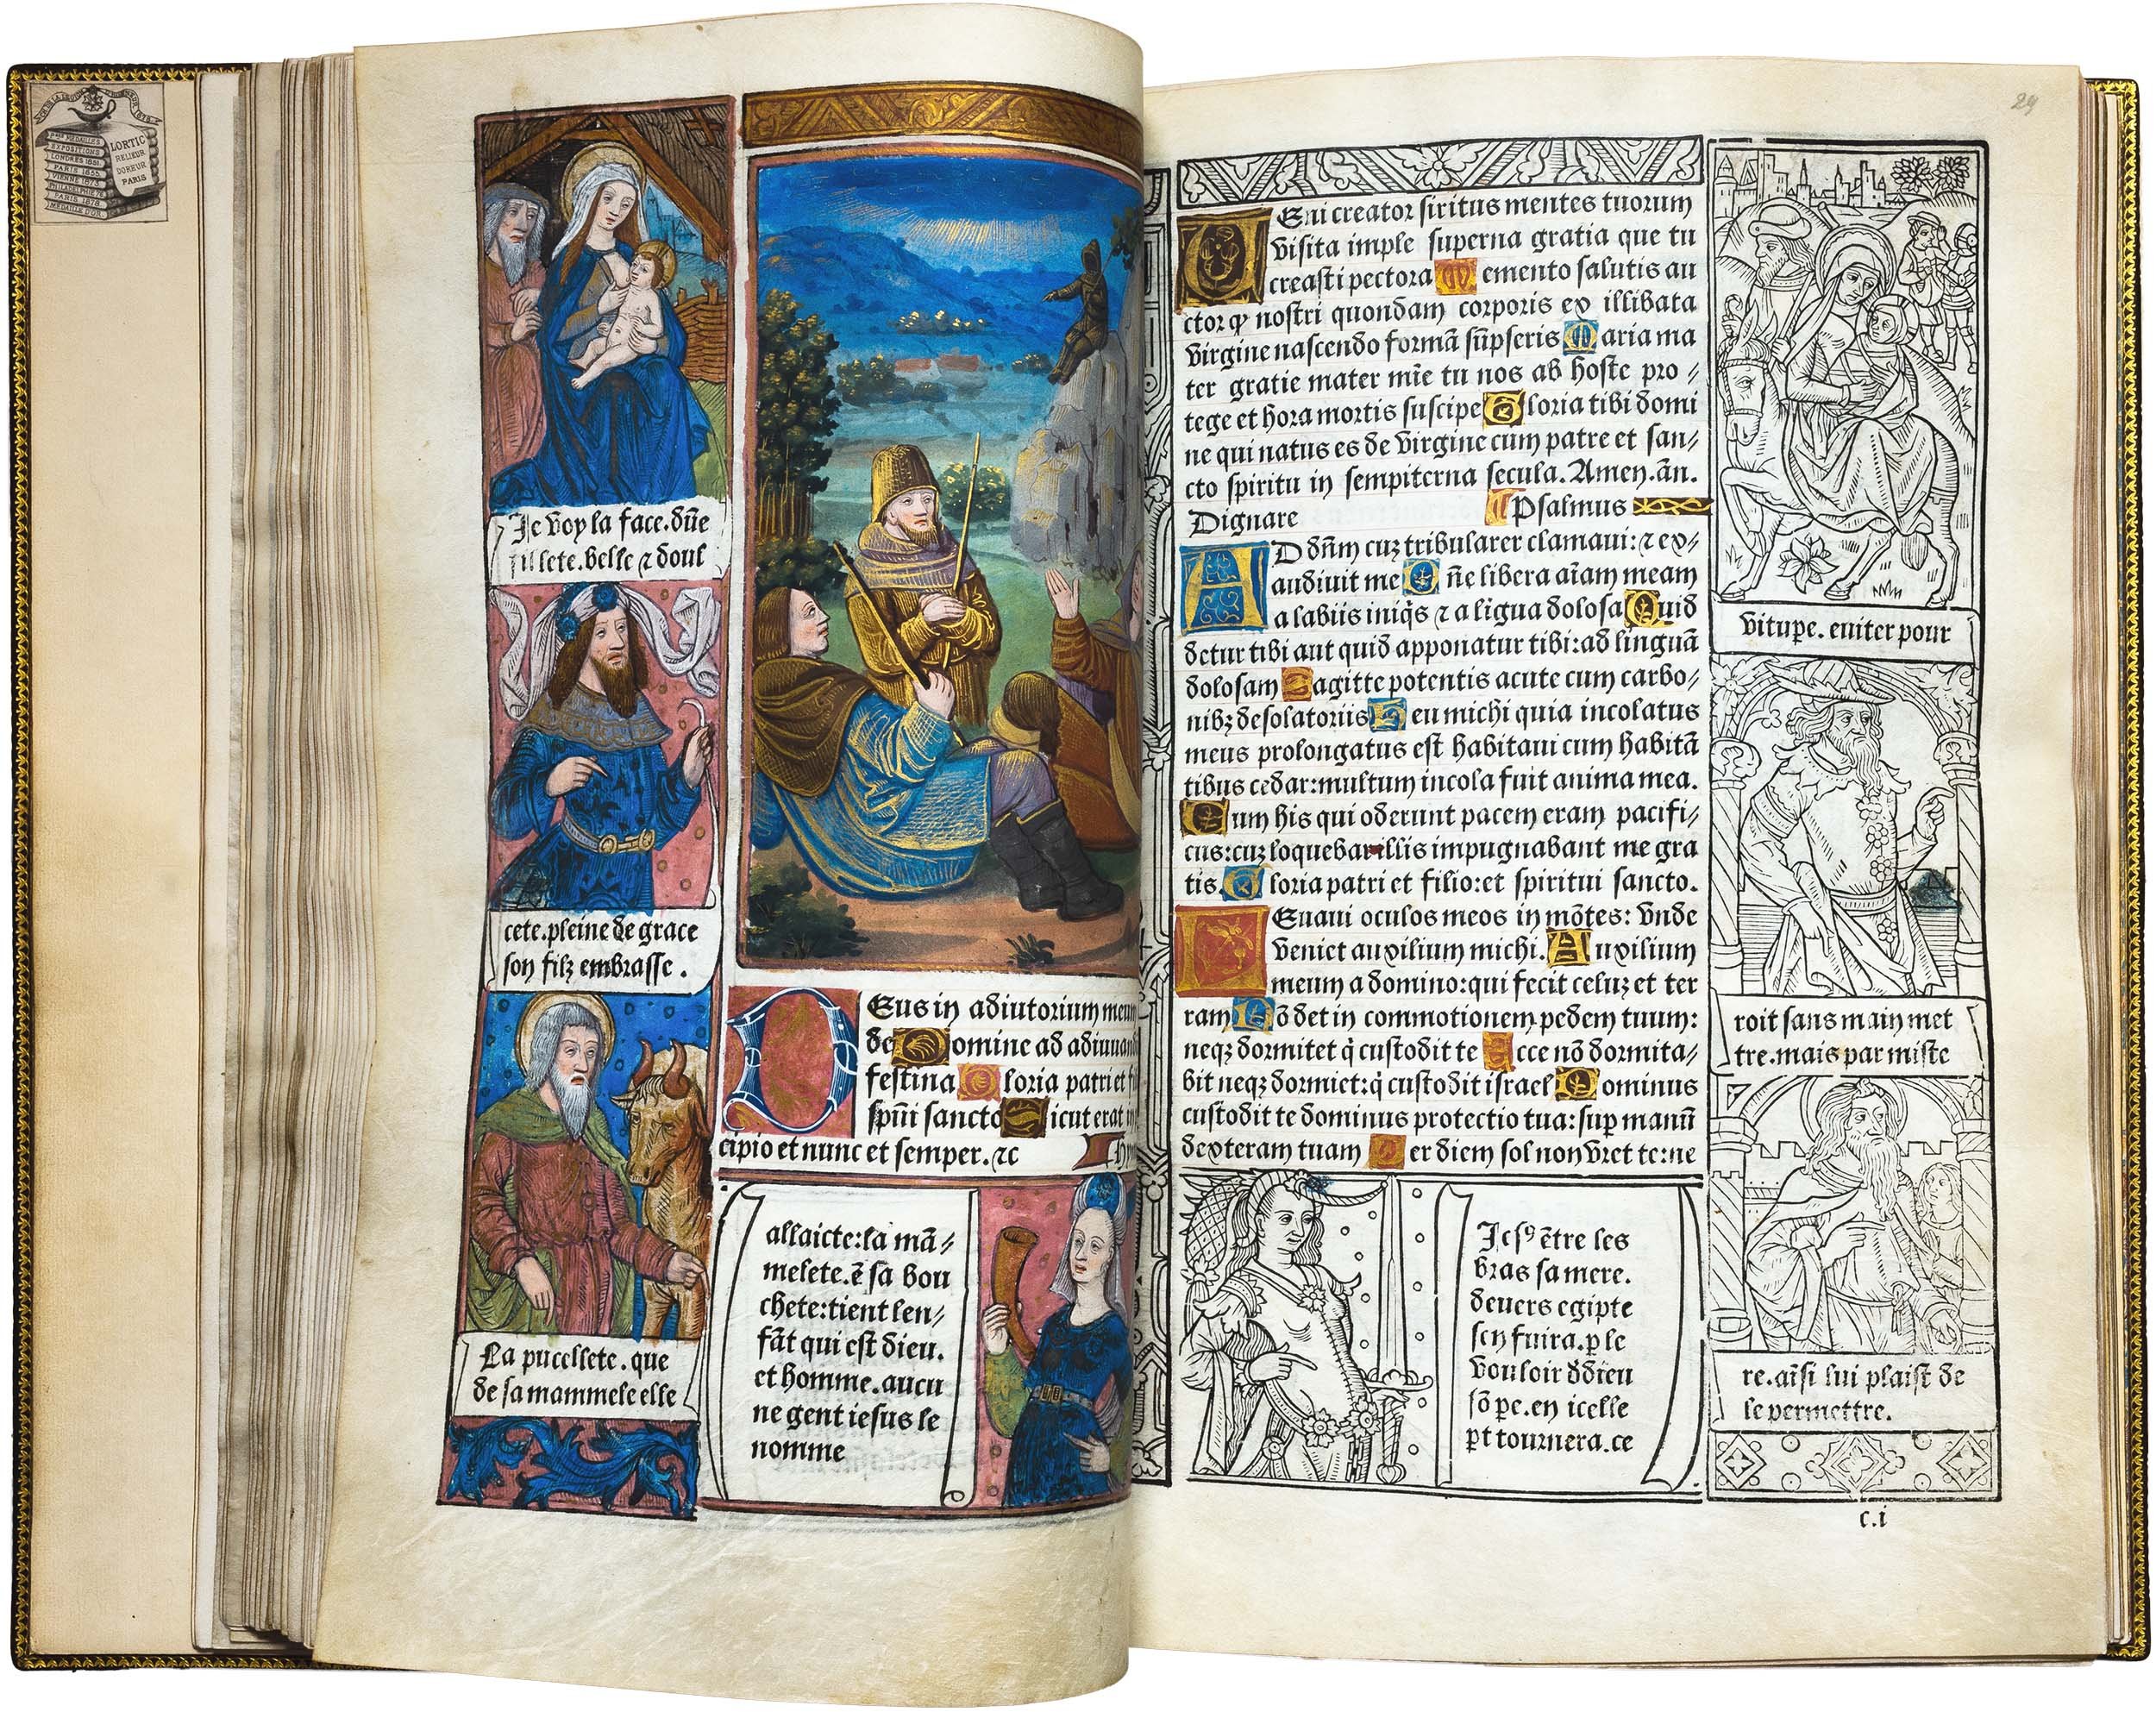 horae-bmv-20.8.1490-printed-book-of-hours-anne-de-beaujeu-de-france-grandes-heures-royales-31.jpg